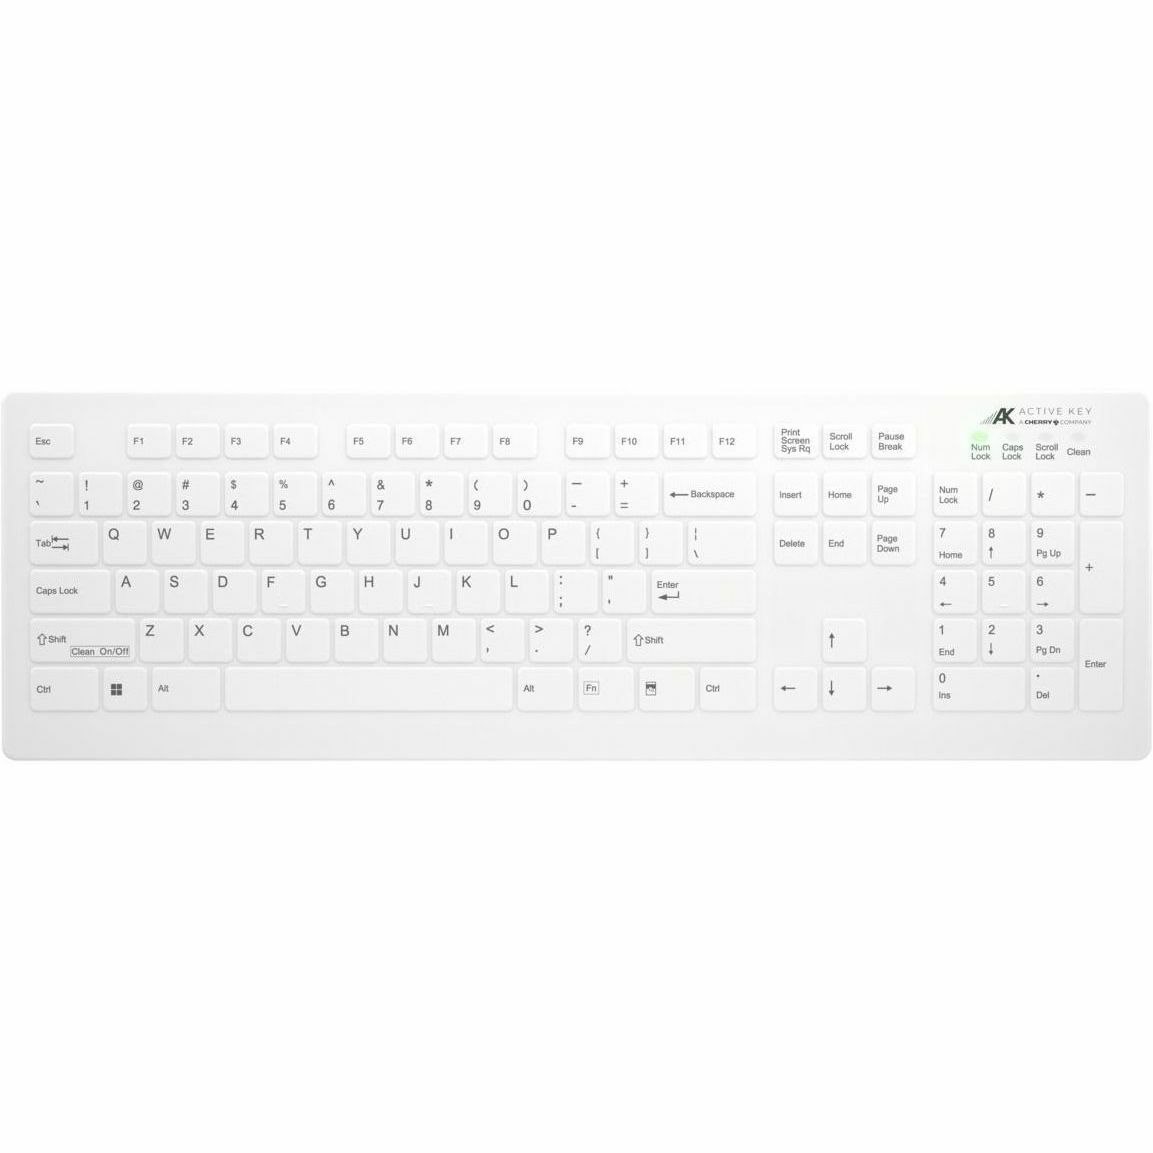 CHERRY AK-C8112 Medical Keyboard WL